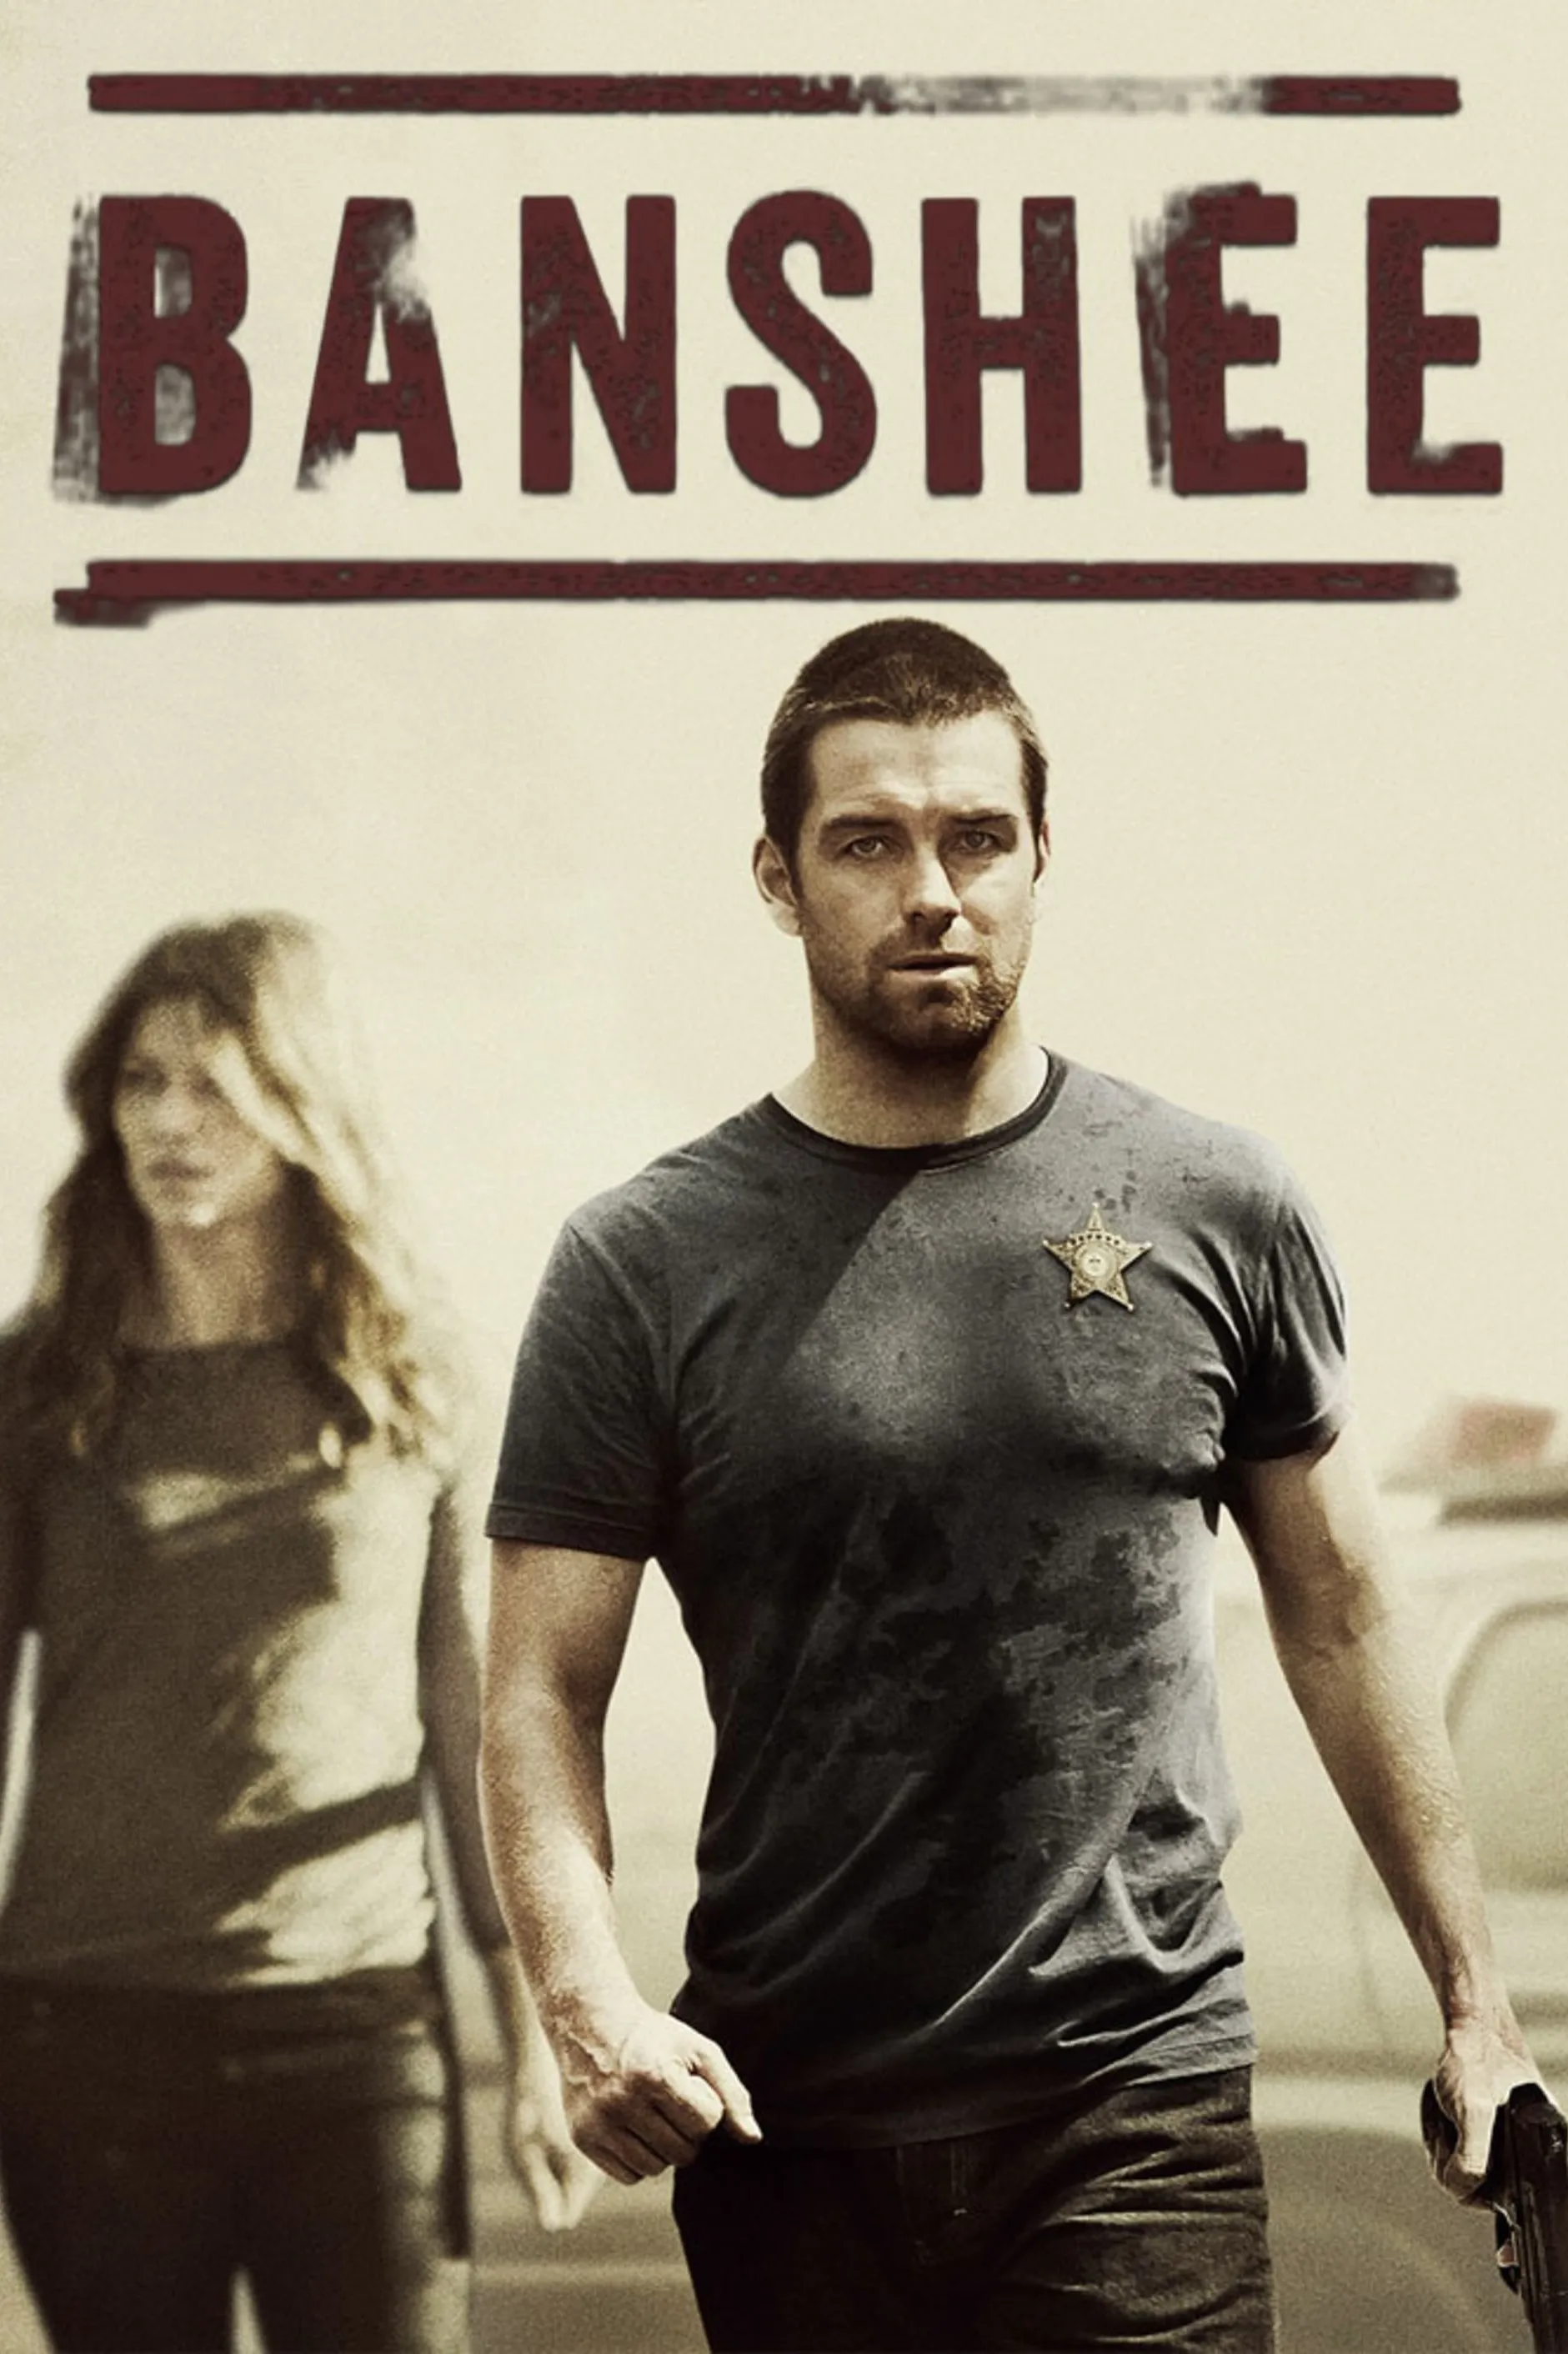 Banshee TV Show Information & Trailers